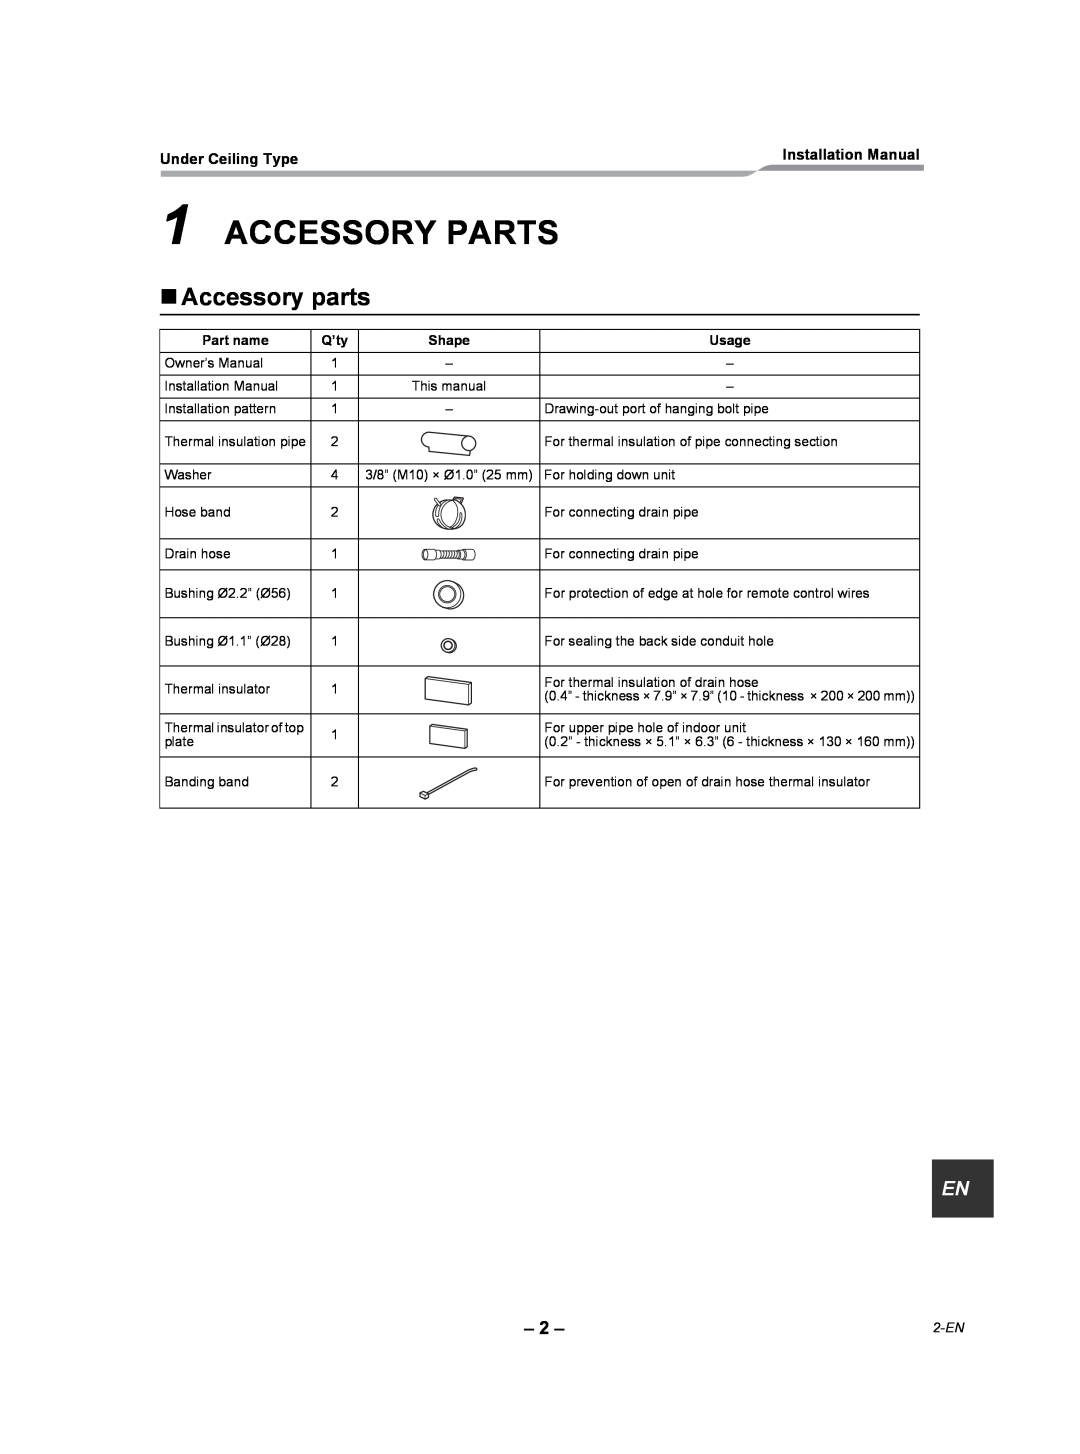 Toshiba RAV-SP240CT-UL, RAV-SP420CT-UL, RAV-SP300CT-UL, RAV-SP180CT-UL Accessory Parts, „Accessory parts, Under Ceiling Type 